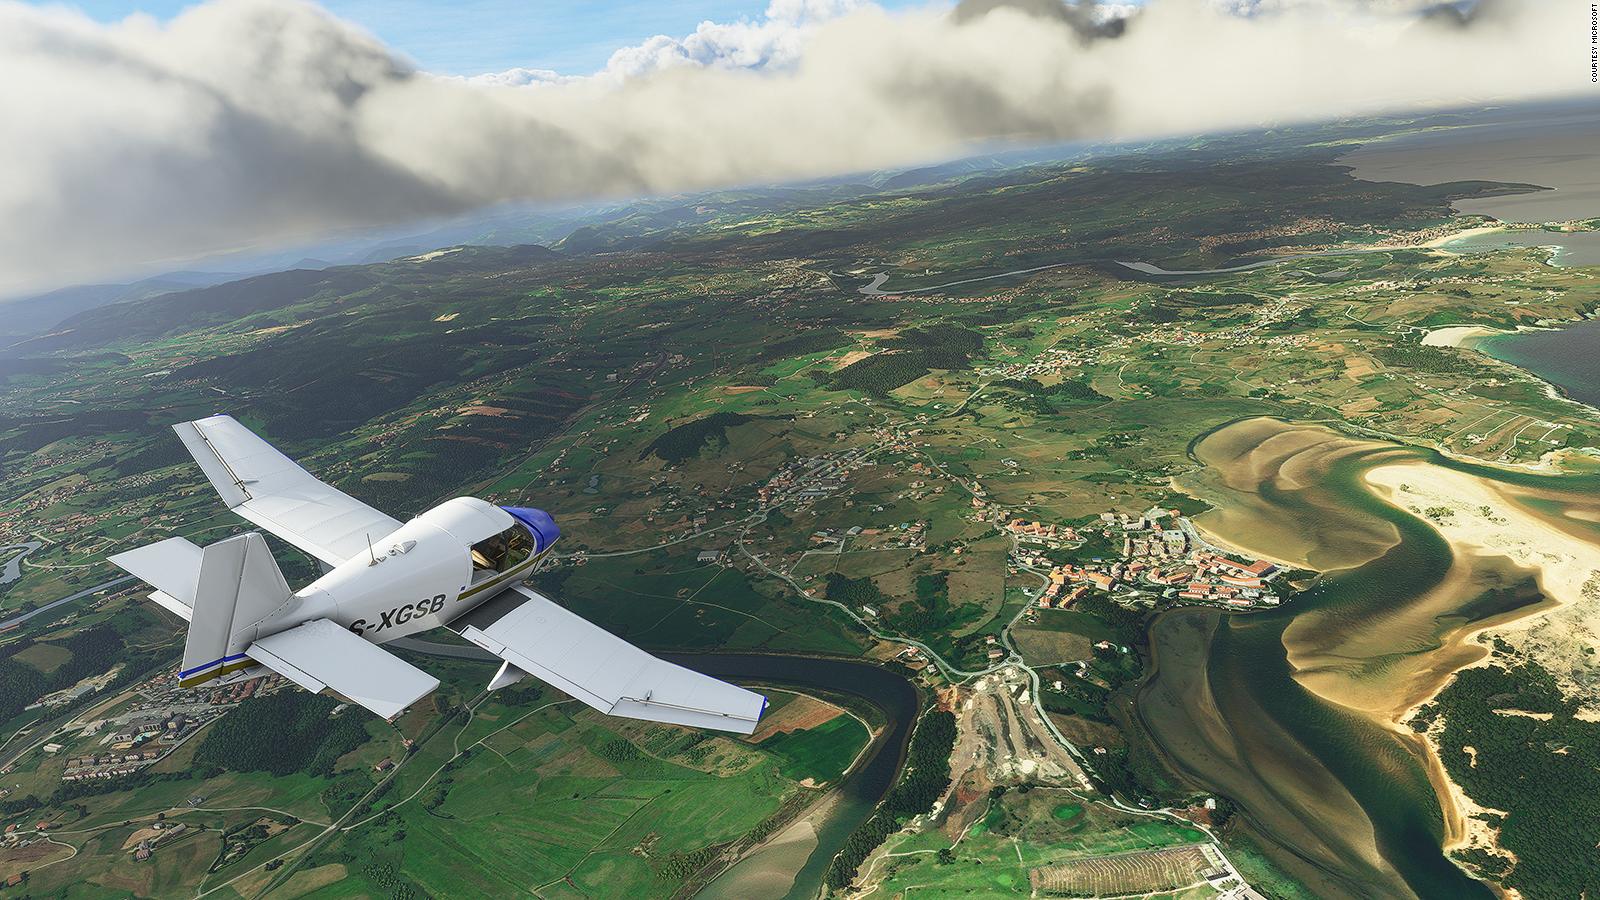 flight simulator 2020 for xbox release date